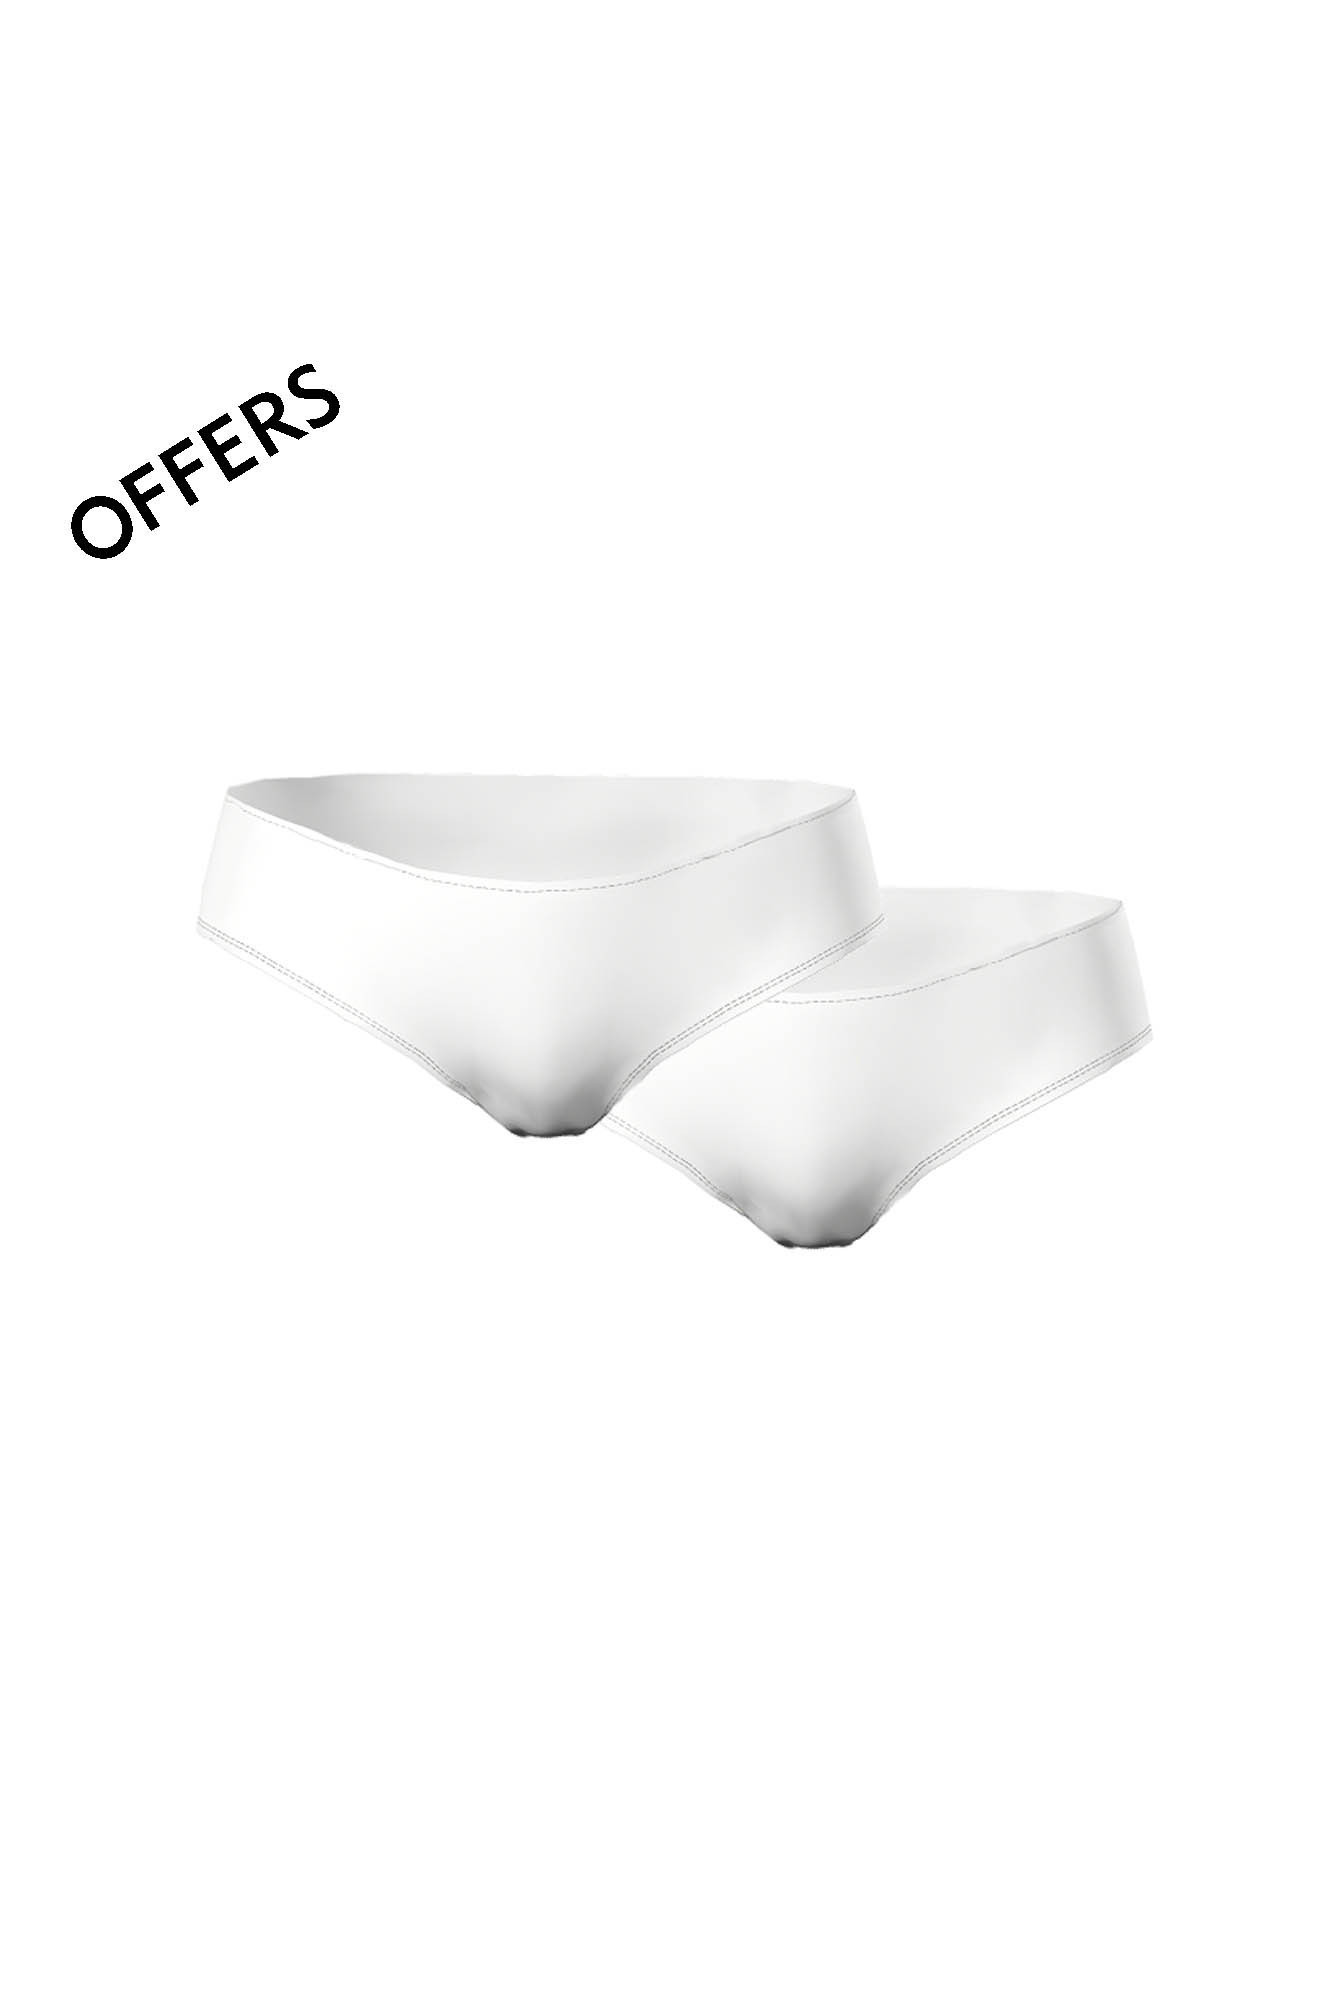 Vamp - Pohodlné jednobarevné dámské kalhotky 03602 - Vamp white XL